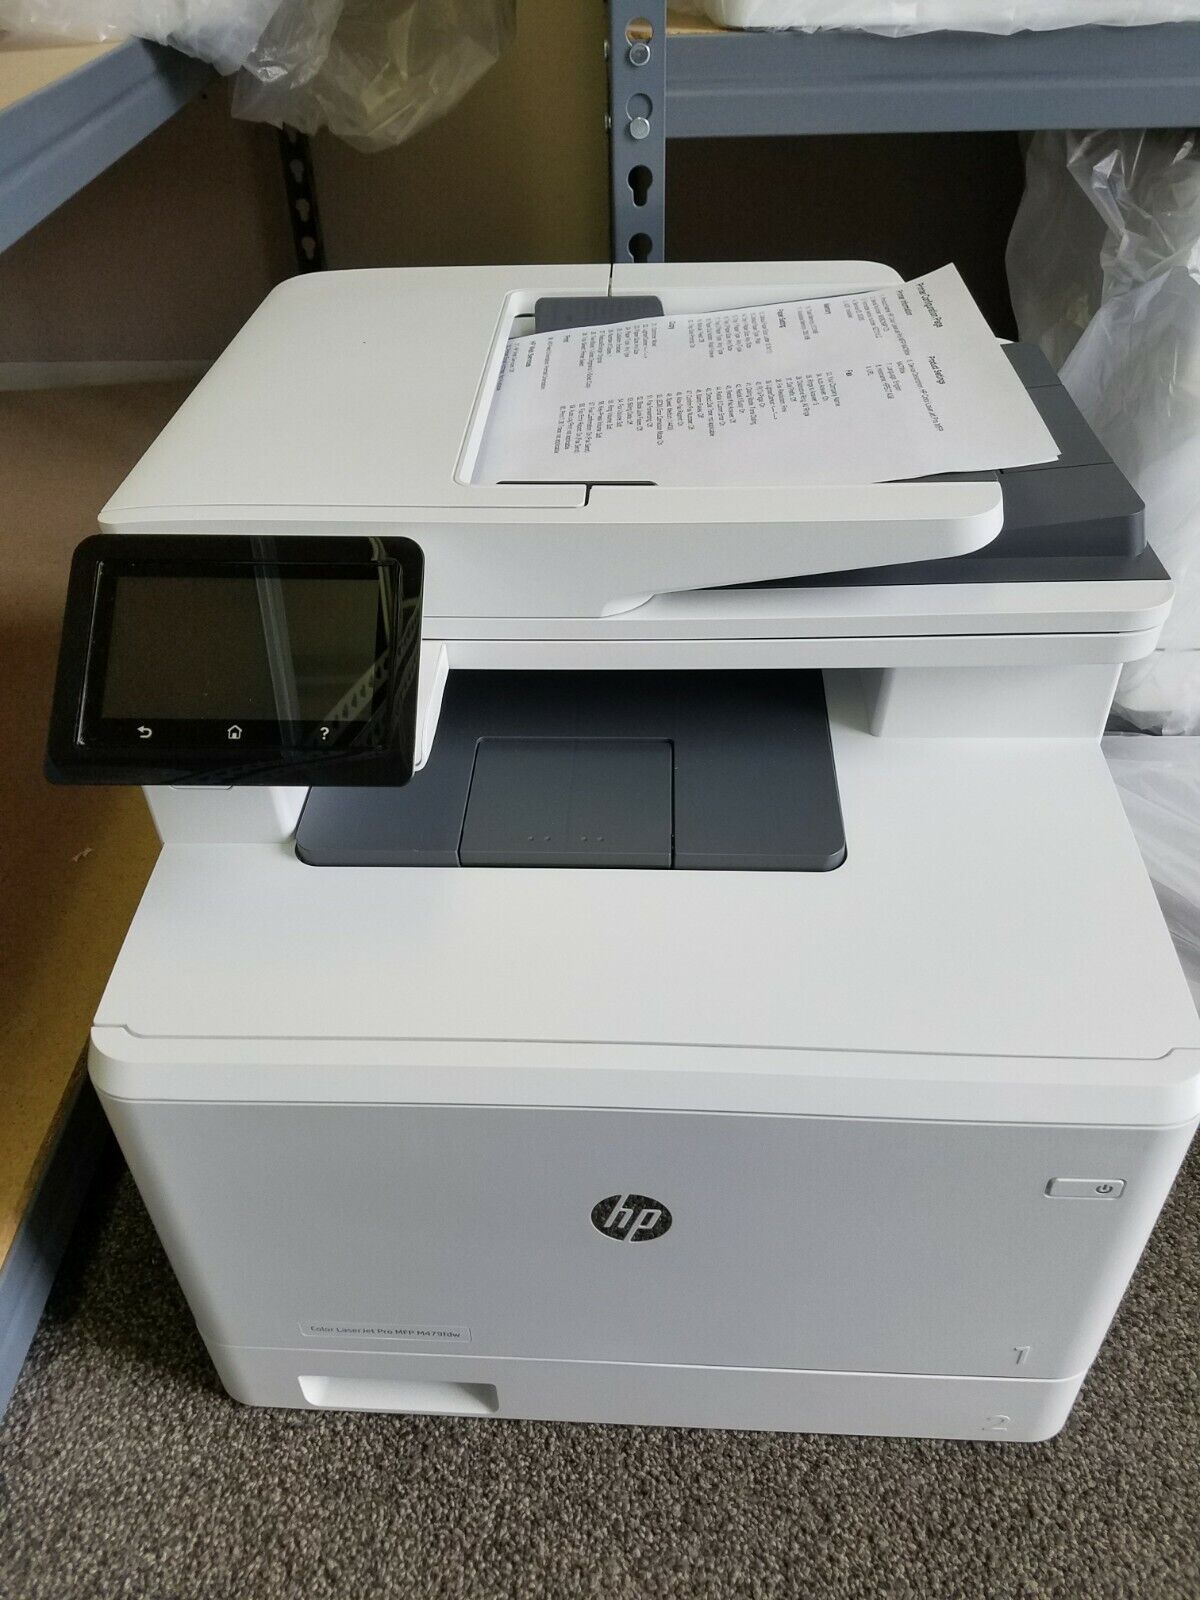 HP LaserJet Pro MFP M479fdw Printer (OEM Toner Included)( Re-Certified)